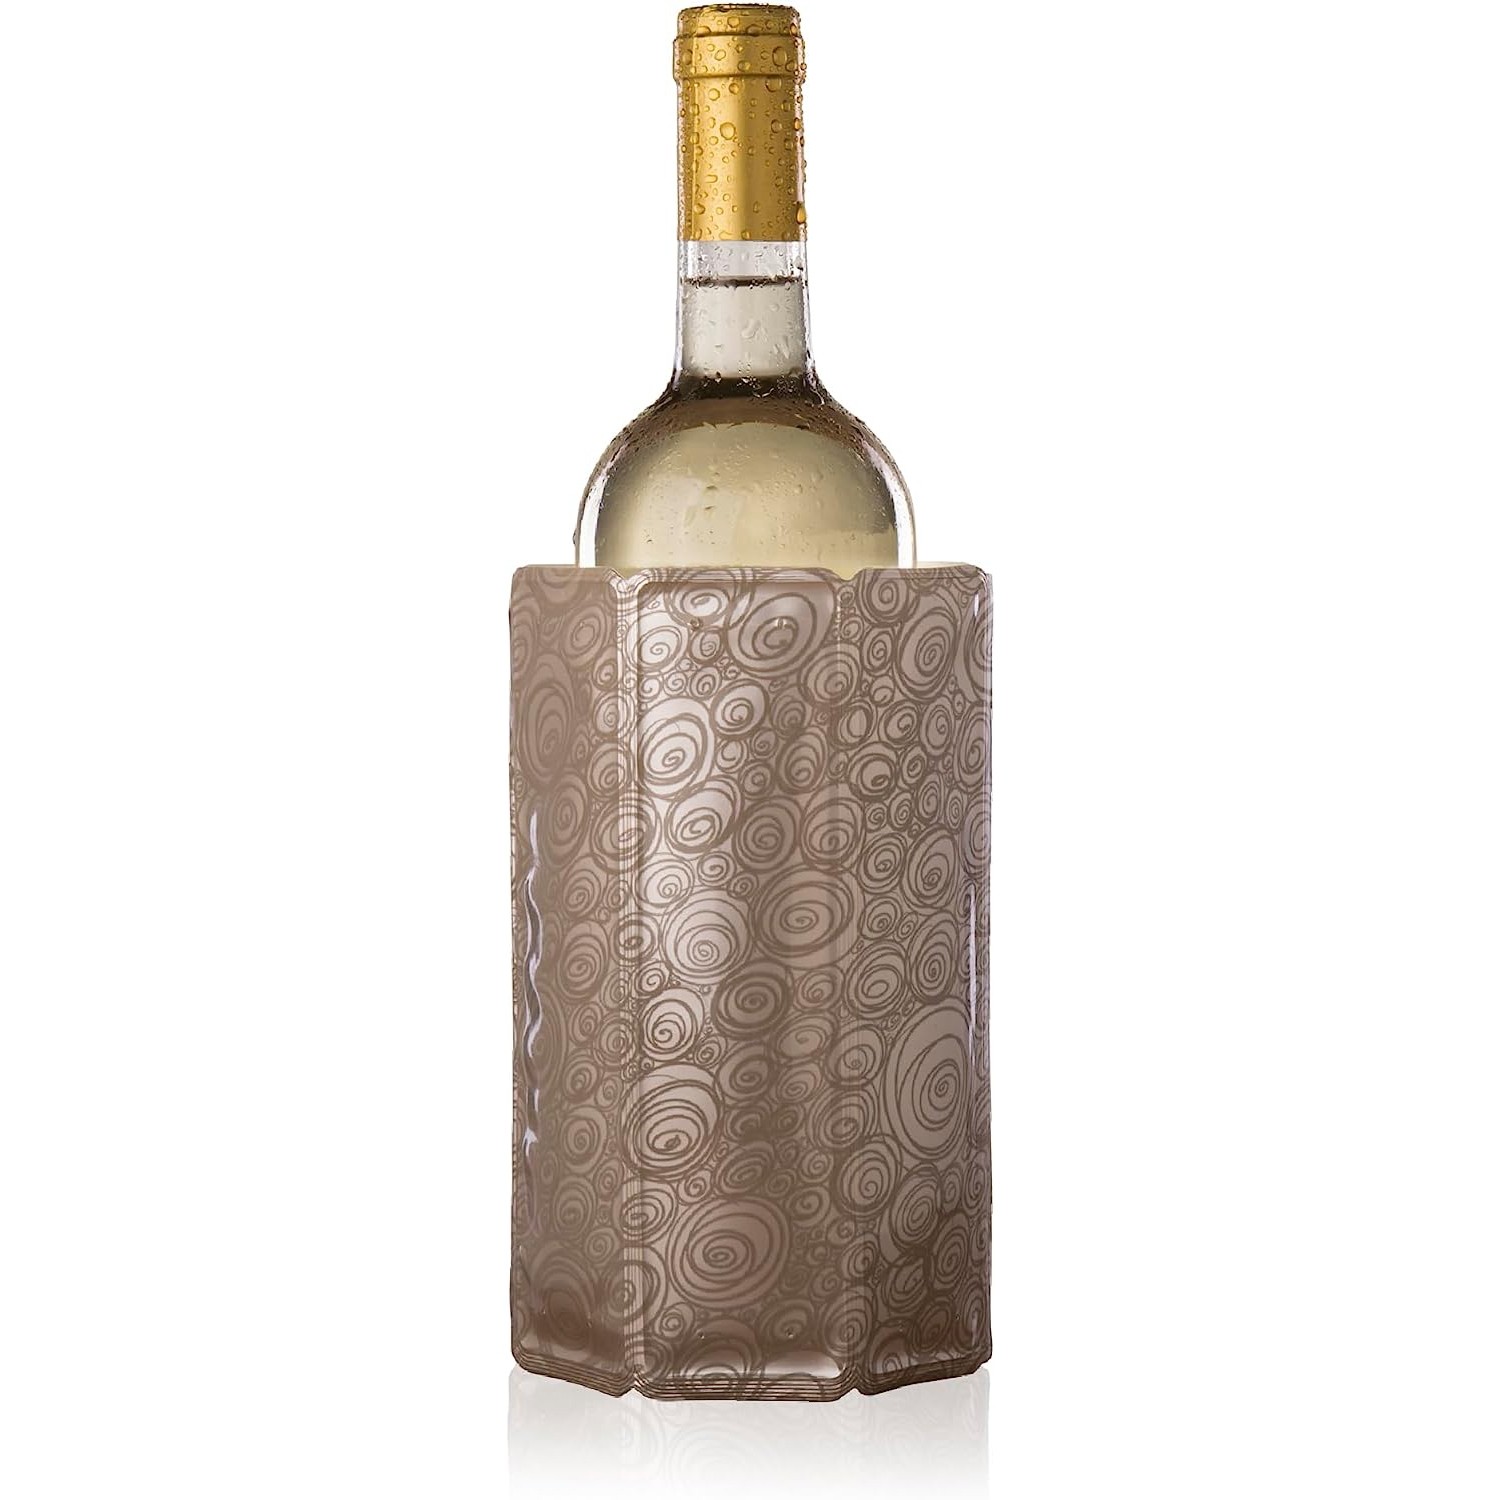 Vacu Vin Wine Set Elegant - Black - 5-Piece